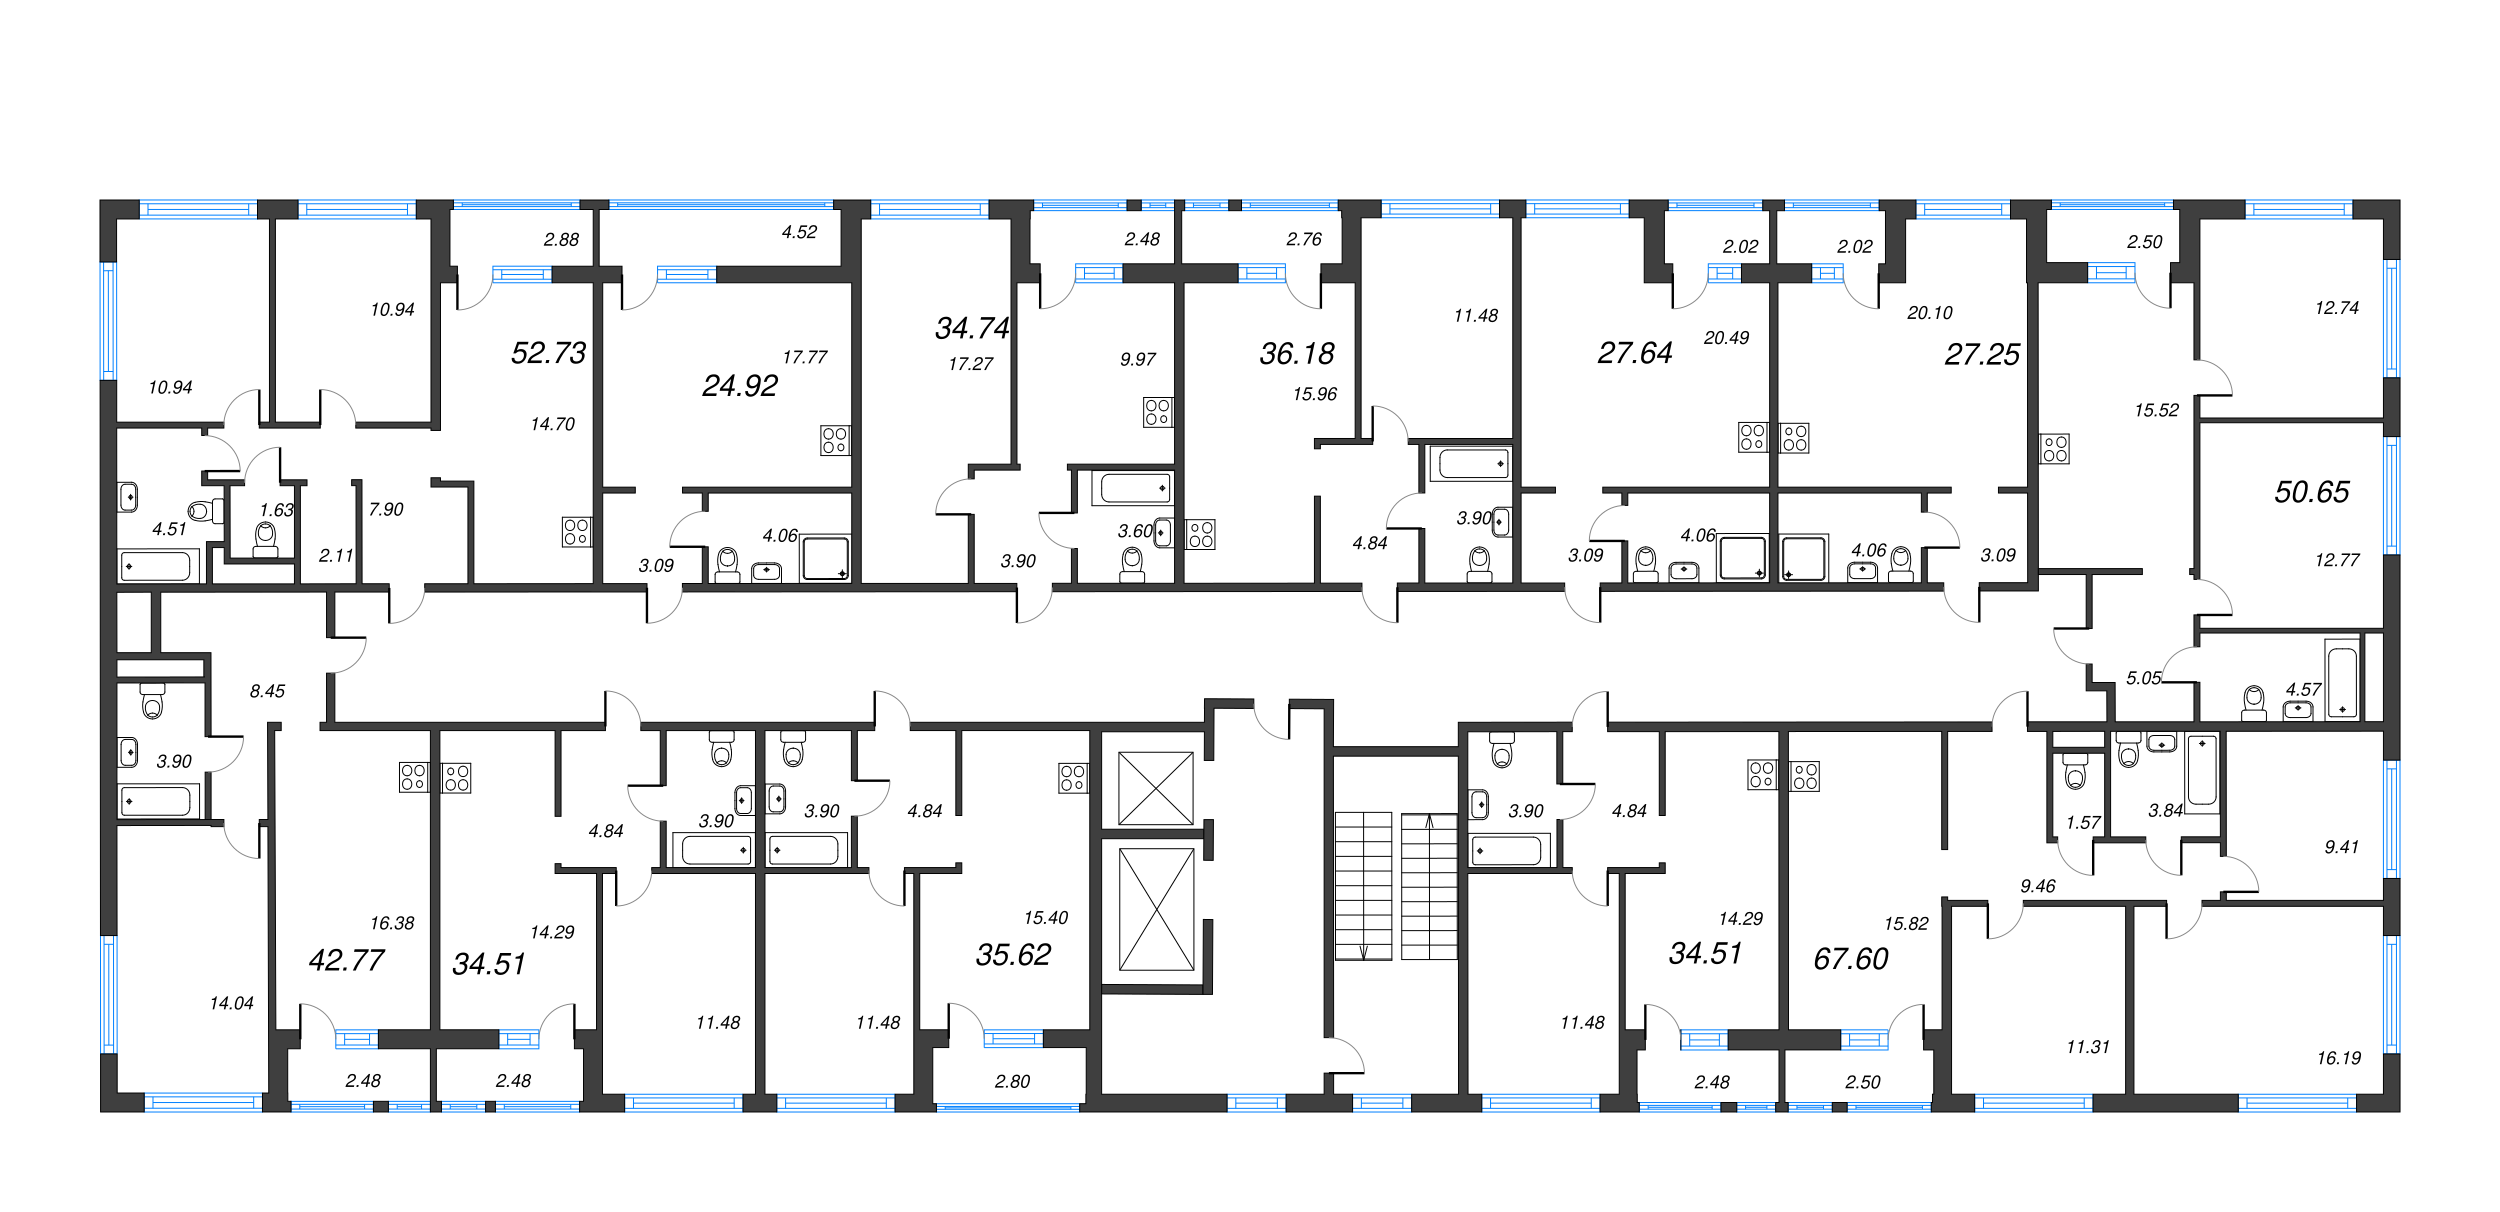 4-комнатная (Евро) квартира, 67.6 м² - планировка этажа